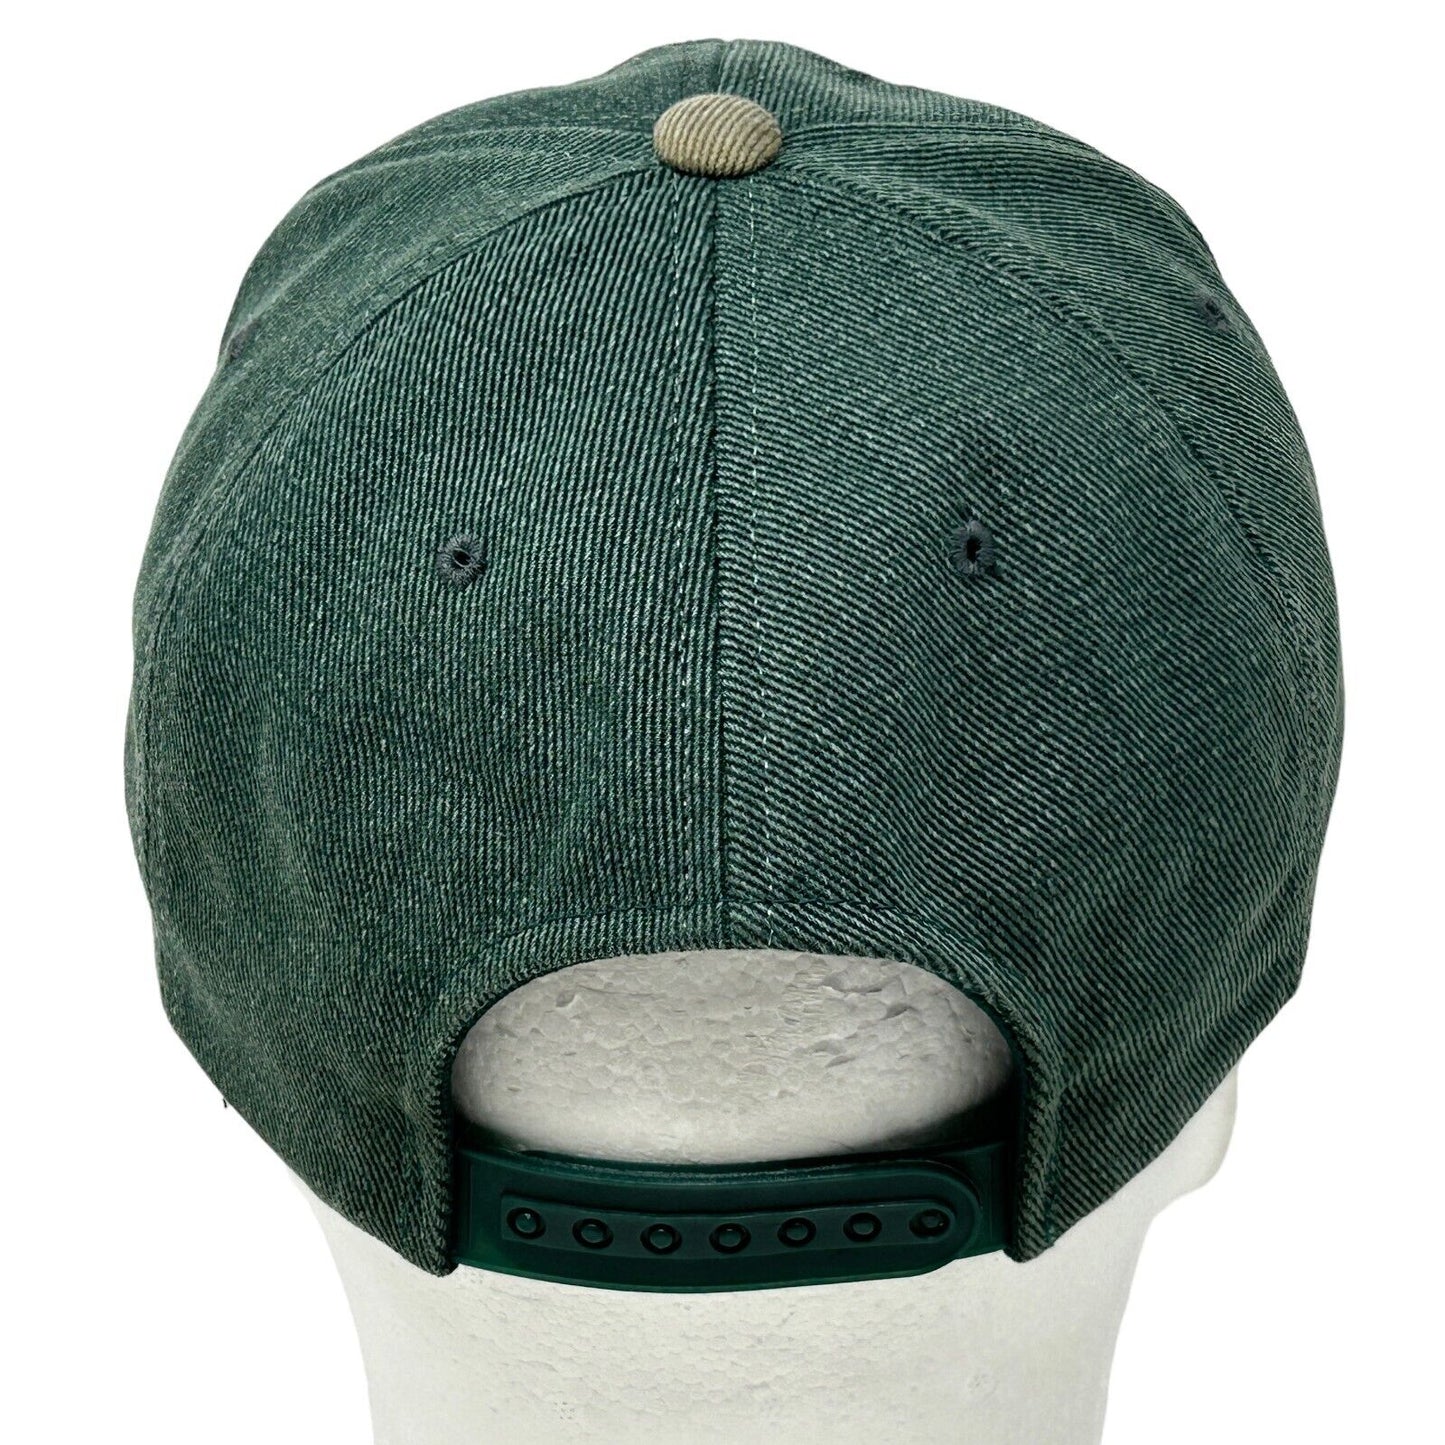 Green Bay Packers Vintage 90s Hat Green Denim Lee Sport Snapback Baseball Cap